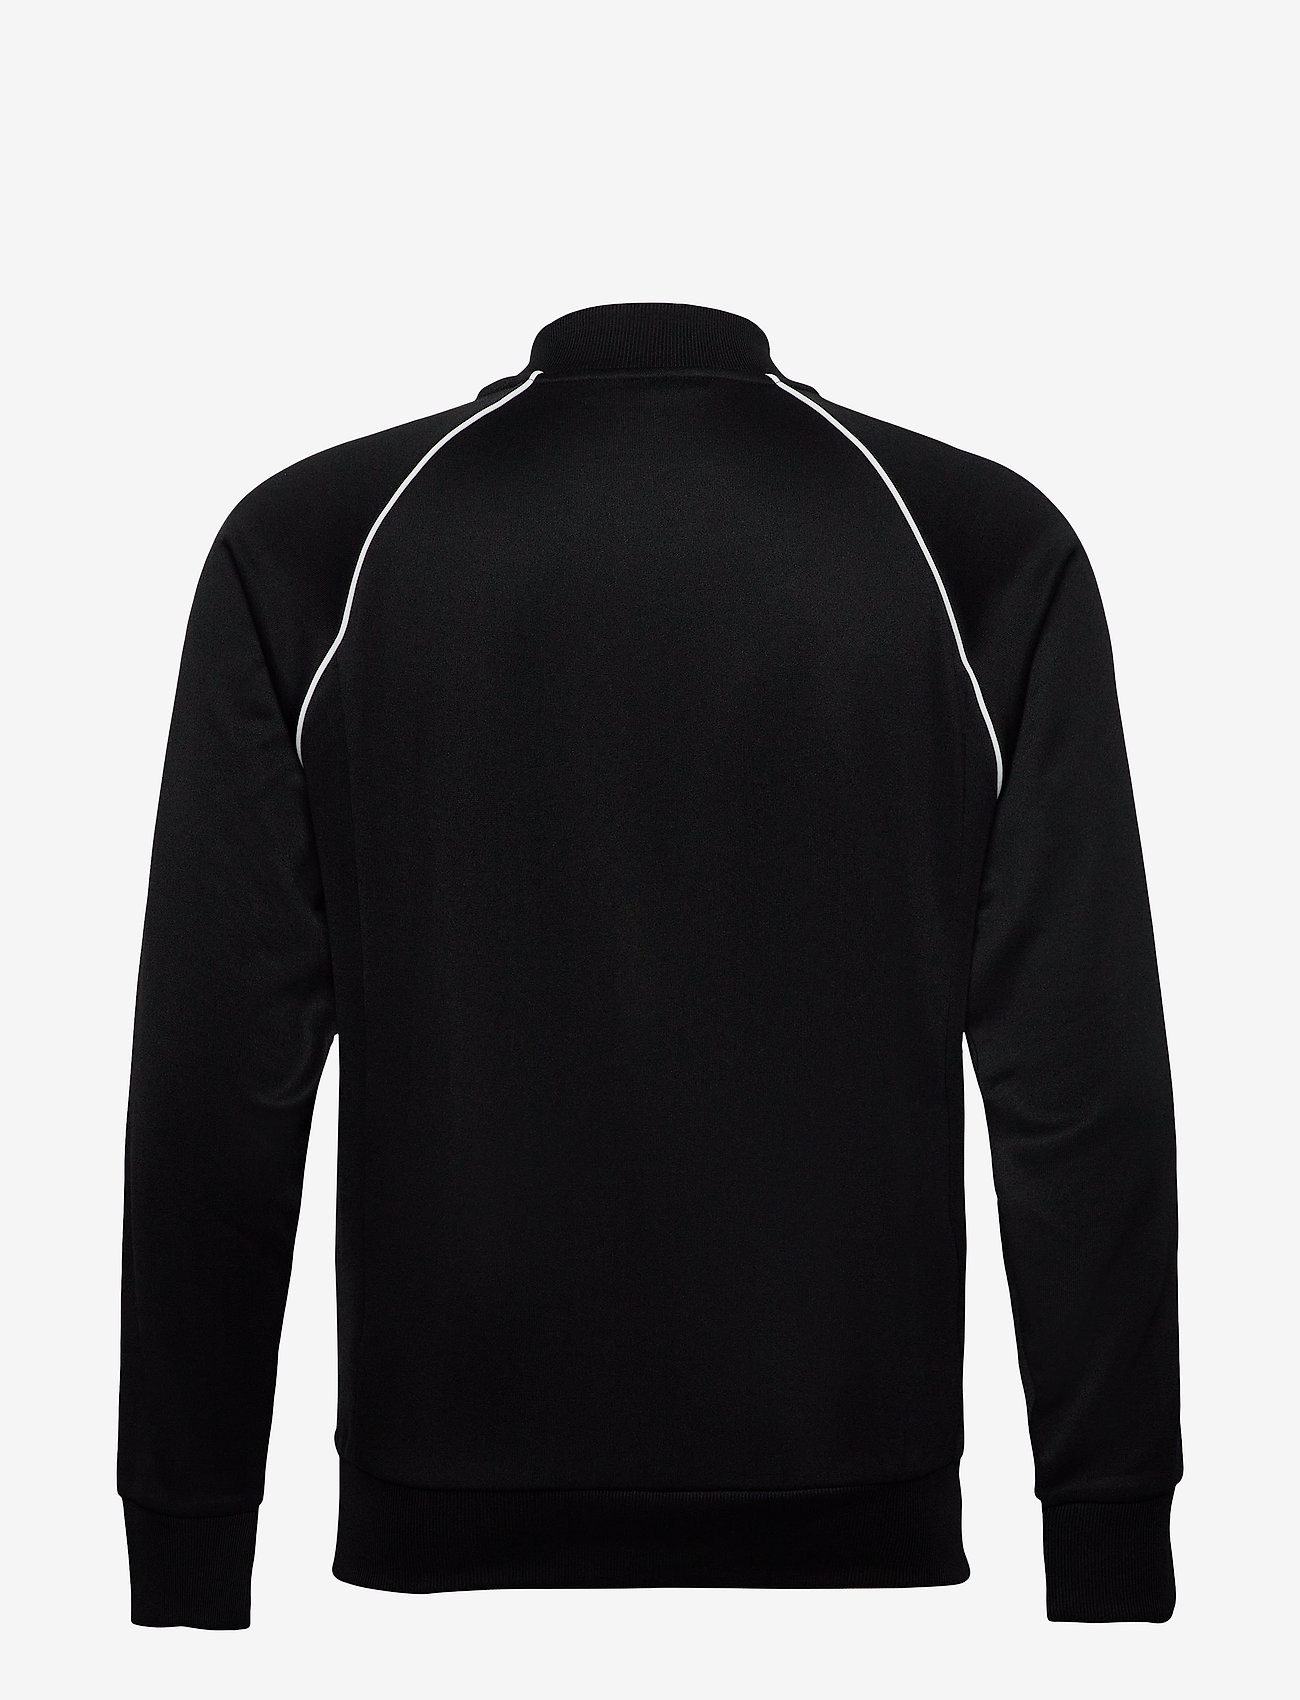 adidas Originals - SST Track Top - hoodies - black/white - 1